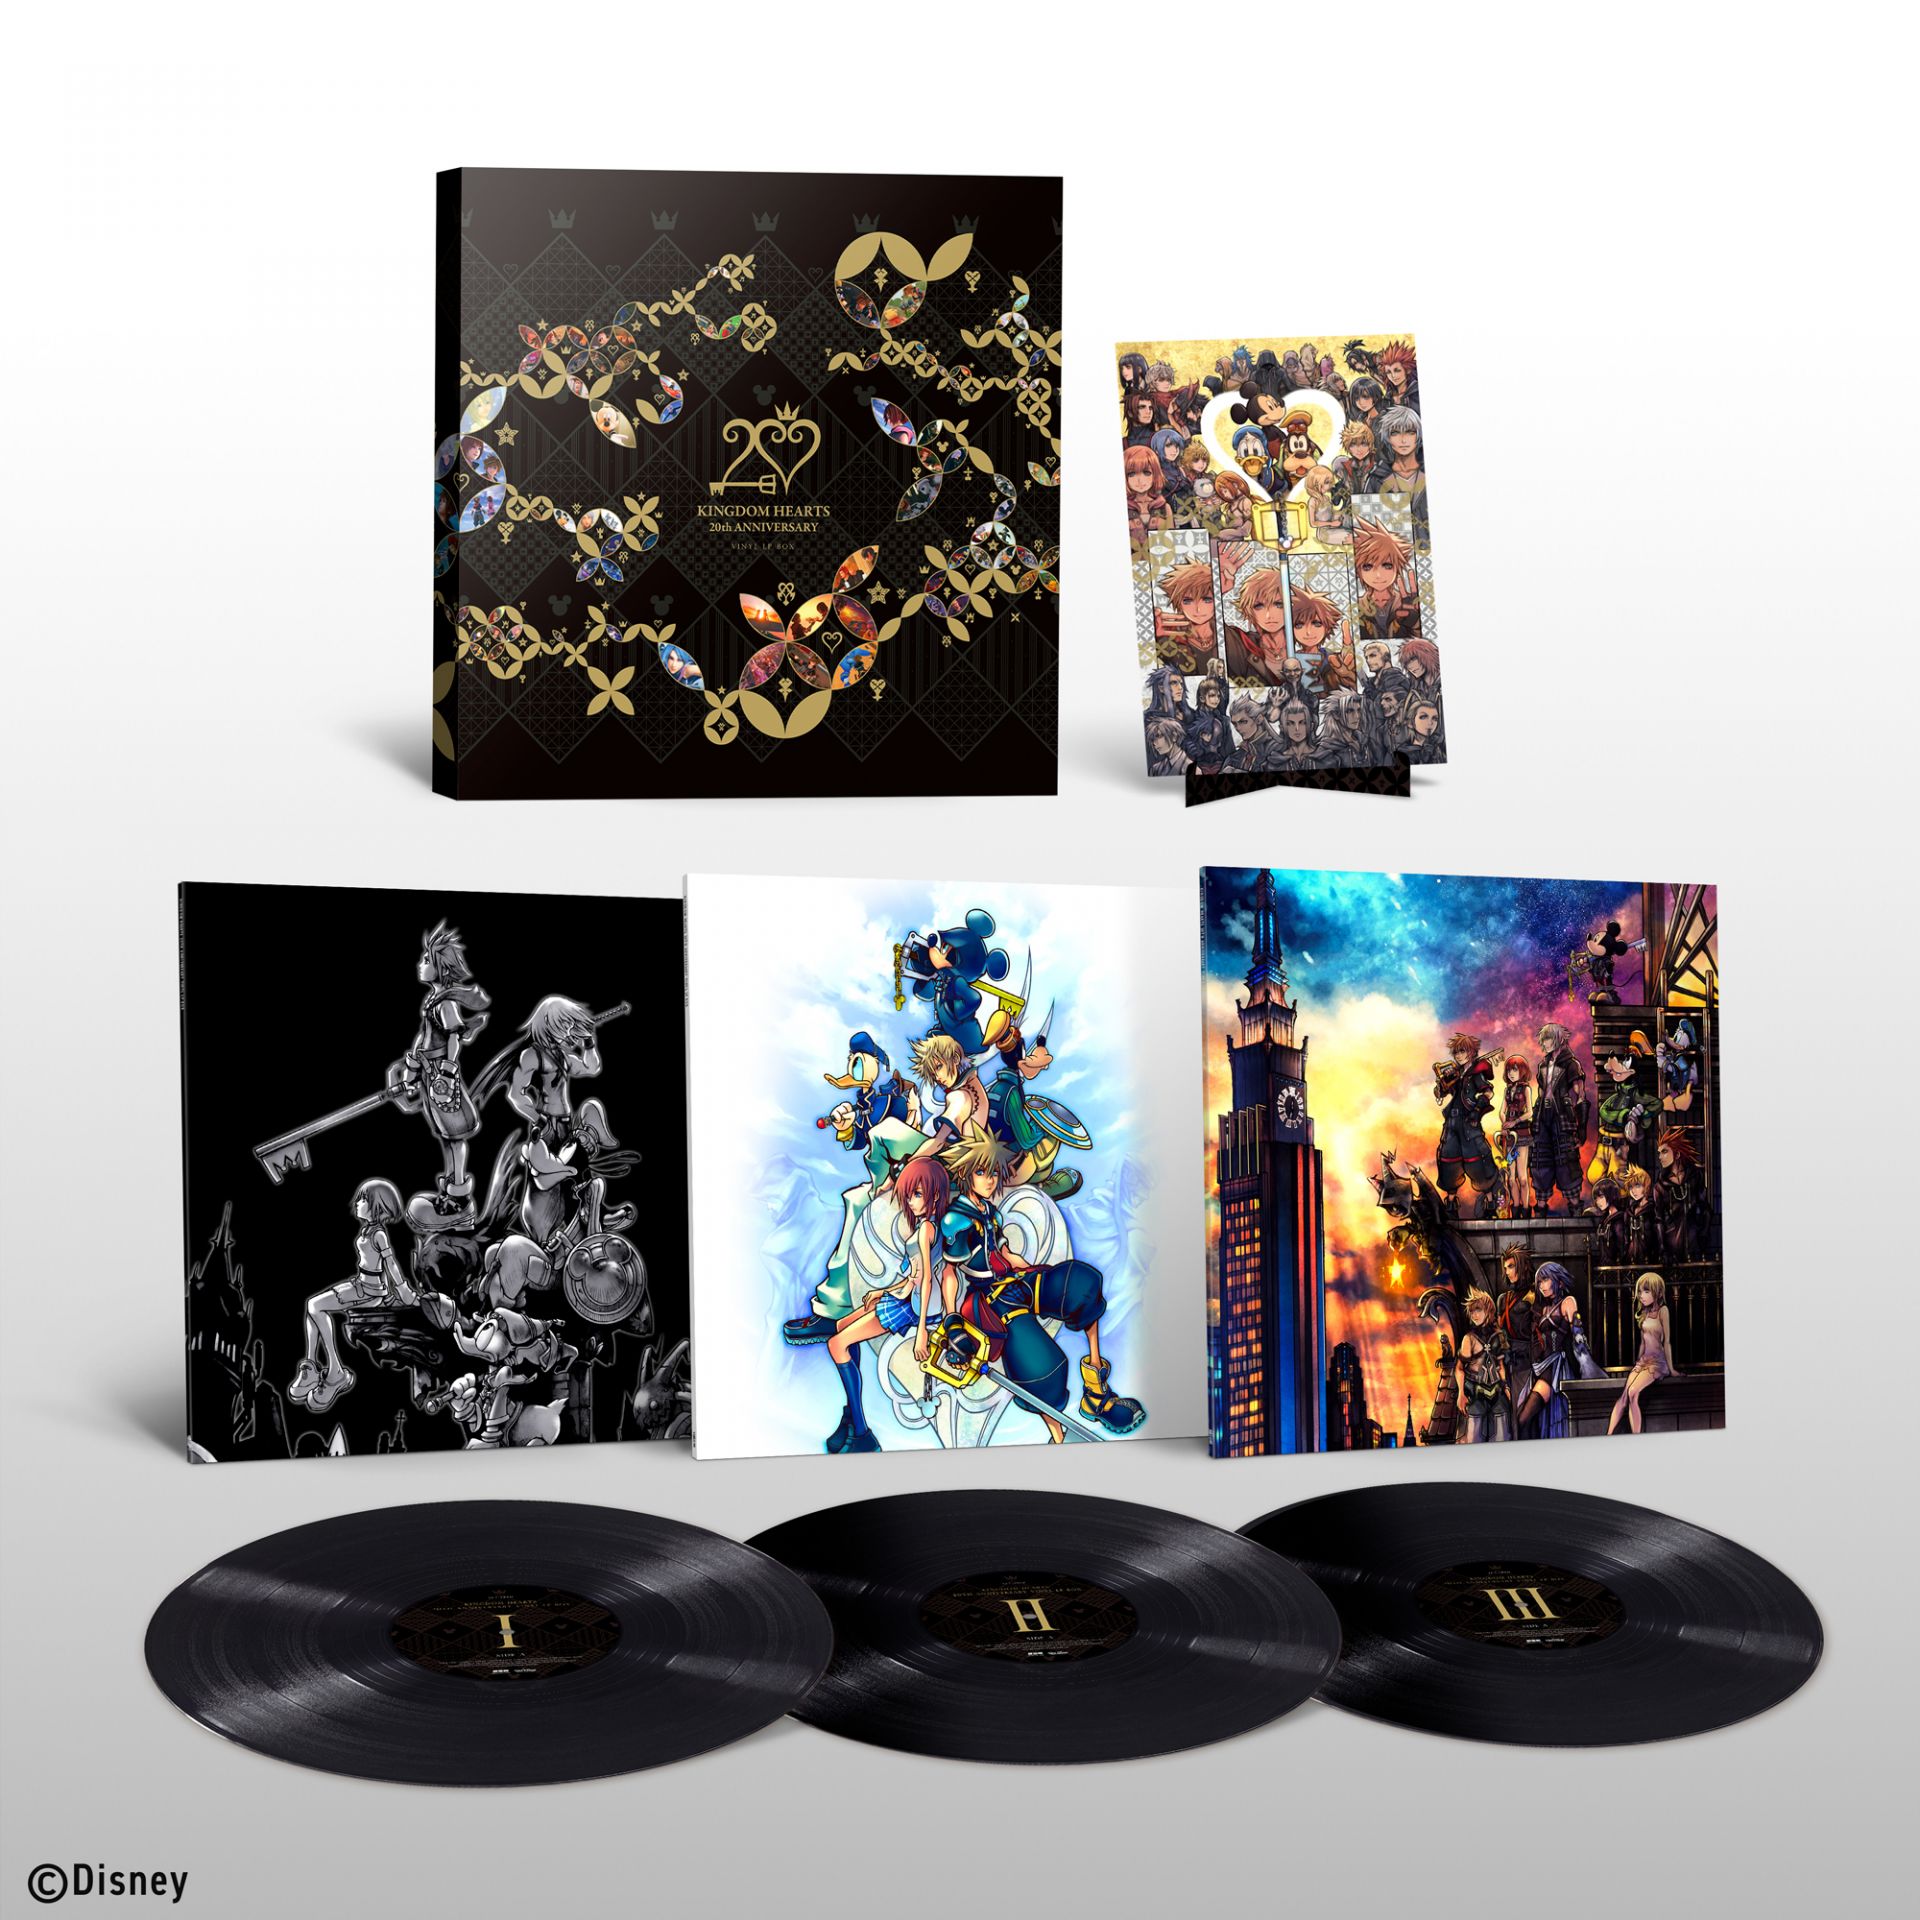 kalkoen De kamer schoonmaken Wapenstilstand KINGDOM HEARTS 20TH ANNIVERSARY VINYL LP BOX | Square Enix Store